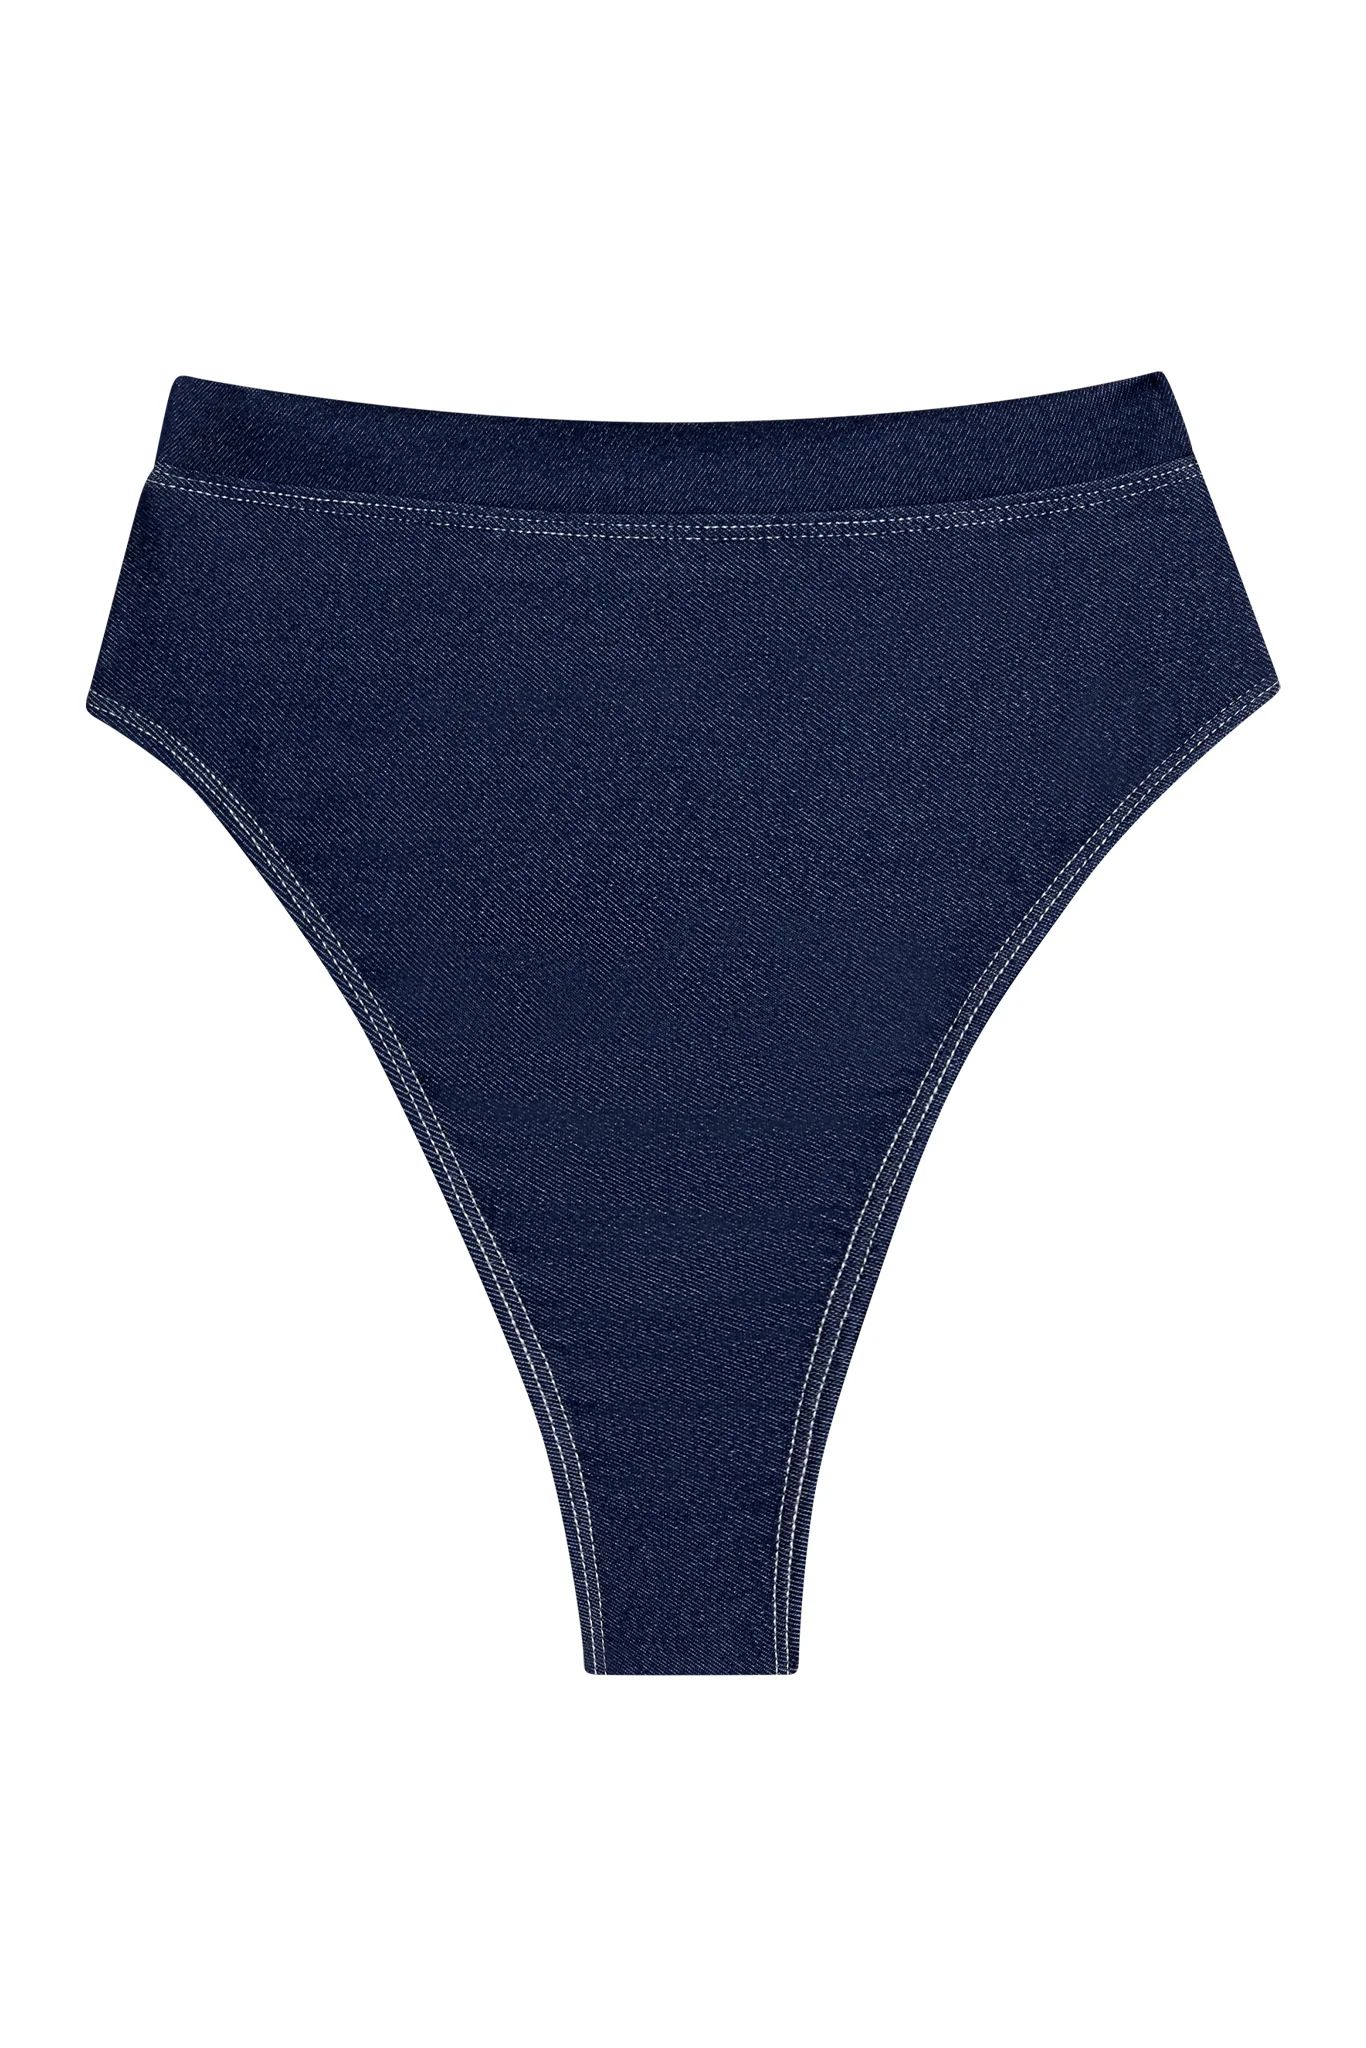 Riviera Bottom - Blue Denim | Monday Swimwear